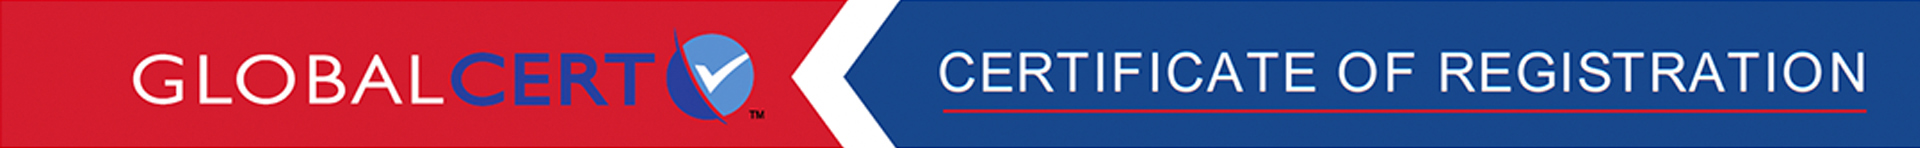 Global Cert Certificate of Registration